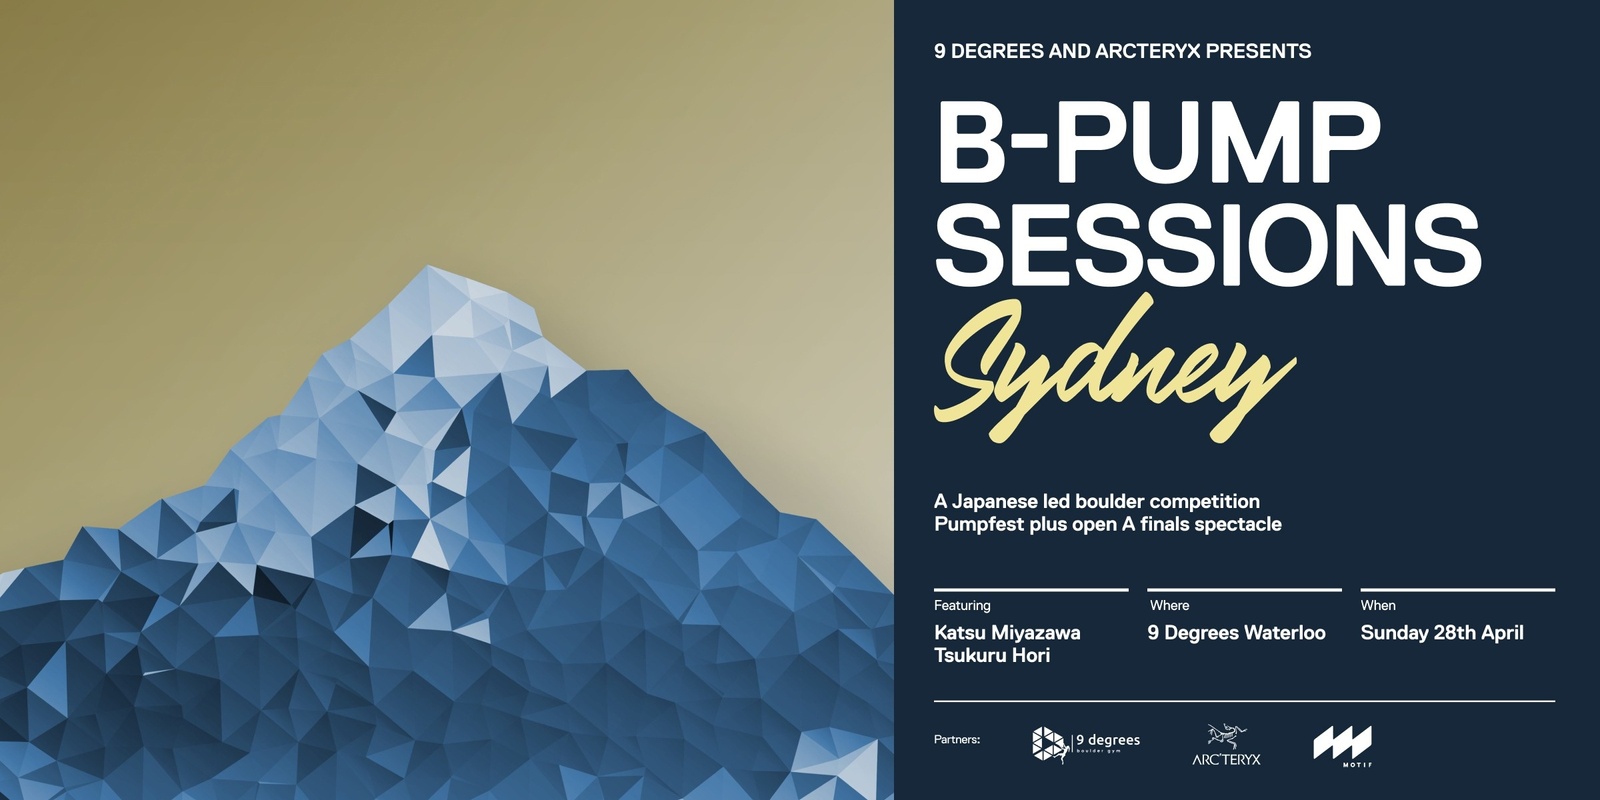 Banner image for B-PUMP Sessions Sydney 